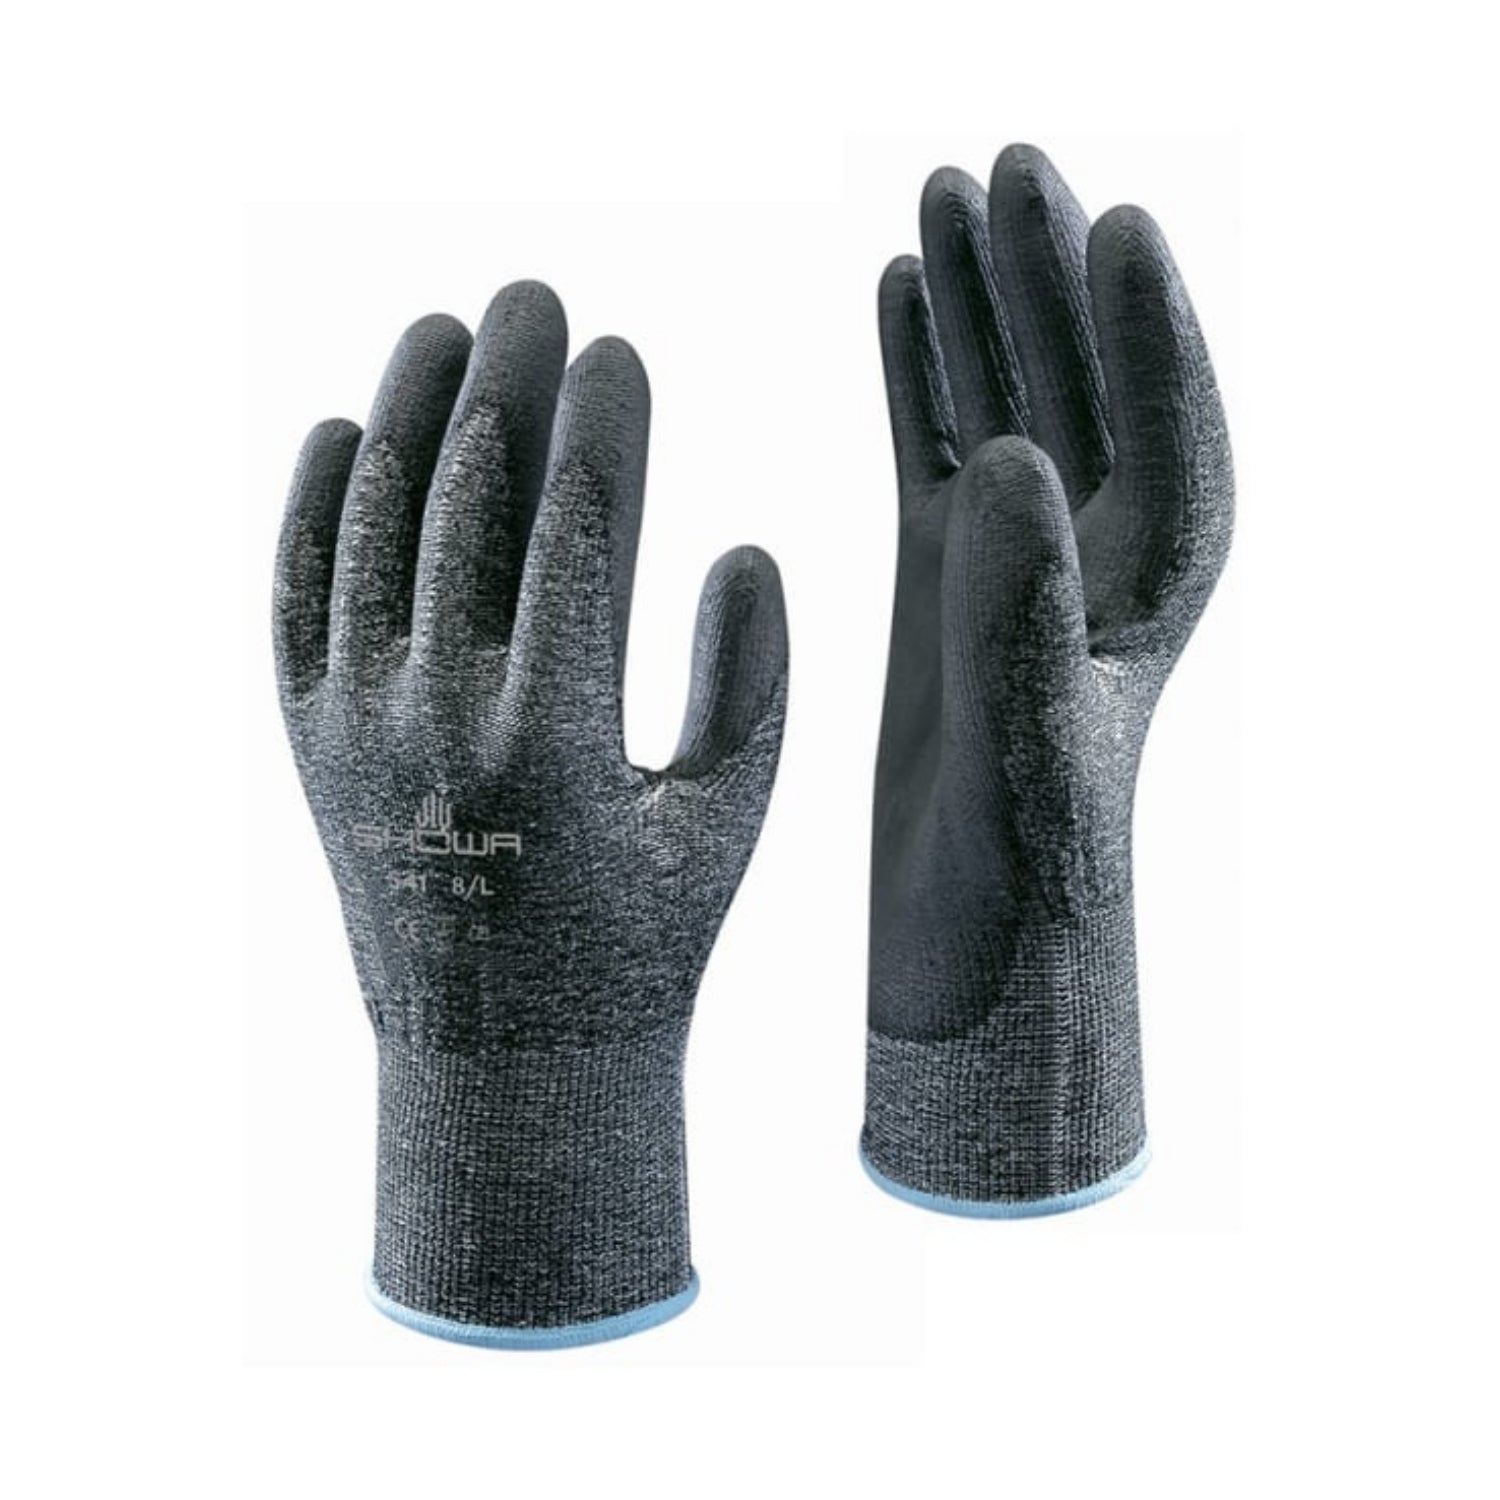 SHOWA 541 - Cut Resistant Gloves